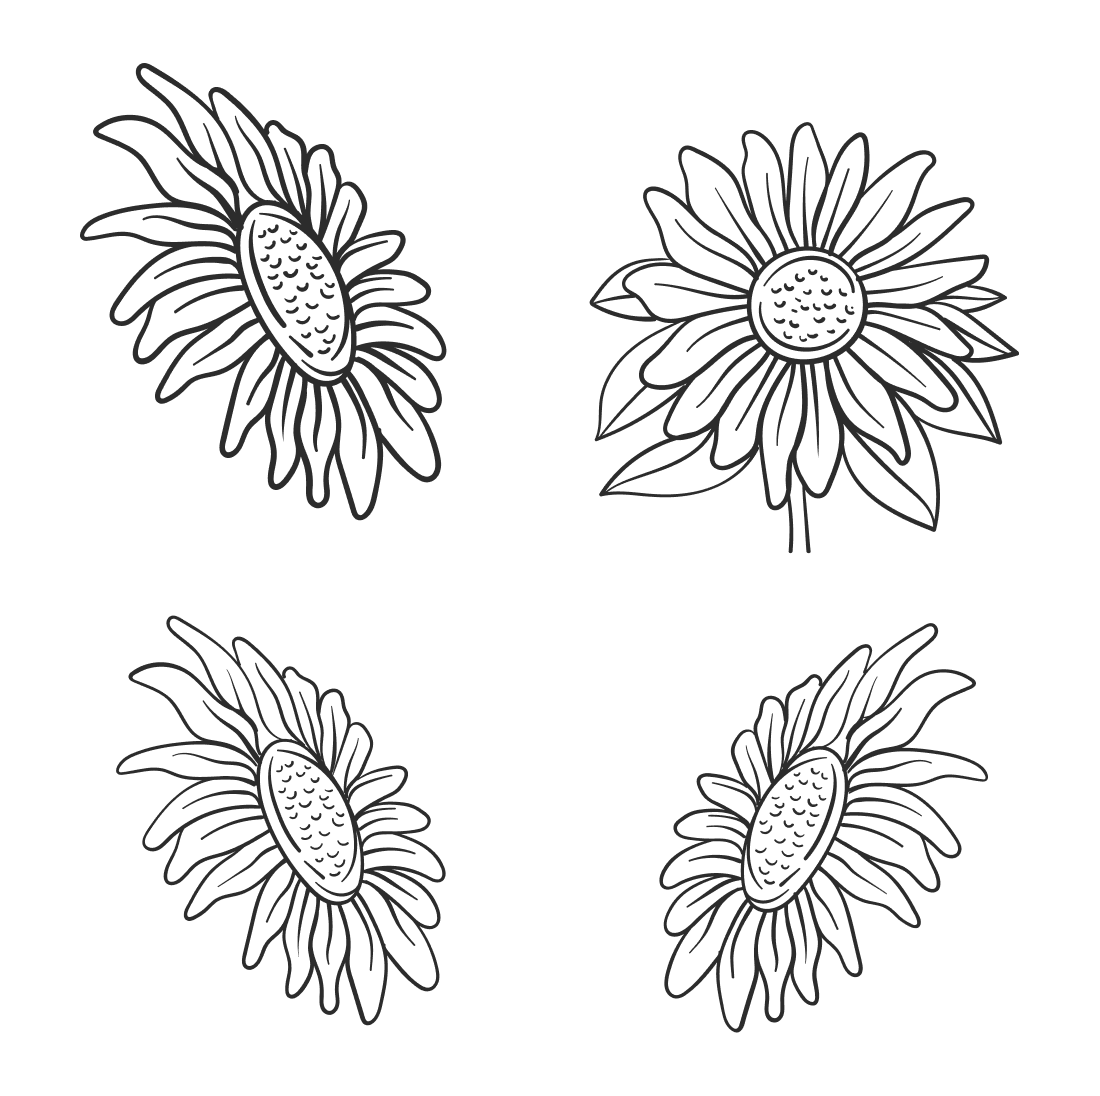 Sunflower SVG Black and White cover.